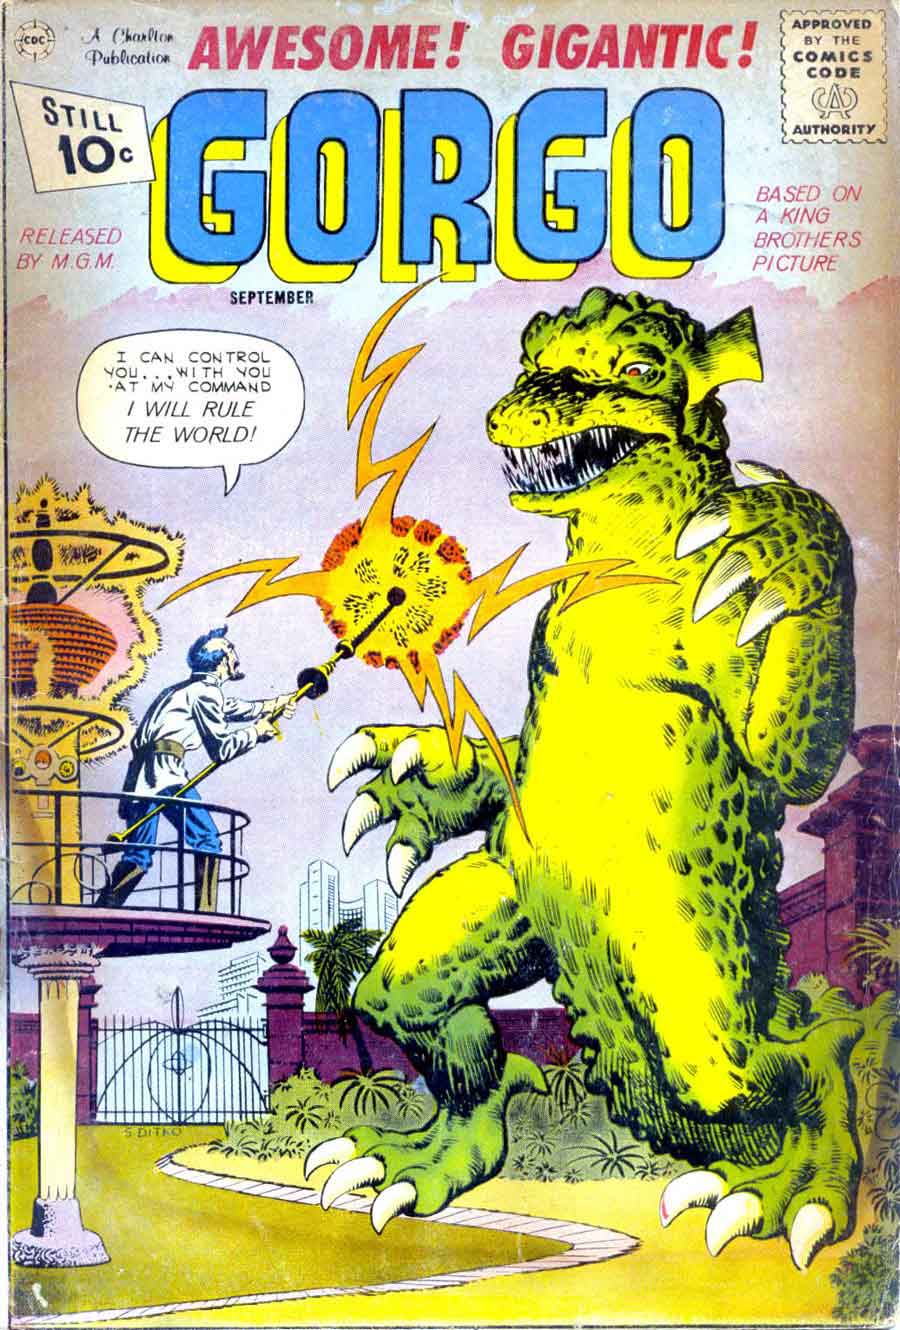 Steve Ditko 1960s silver age charlton monster comic book cover art to Gorgo #3